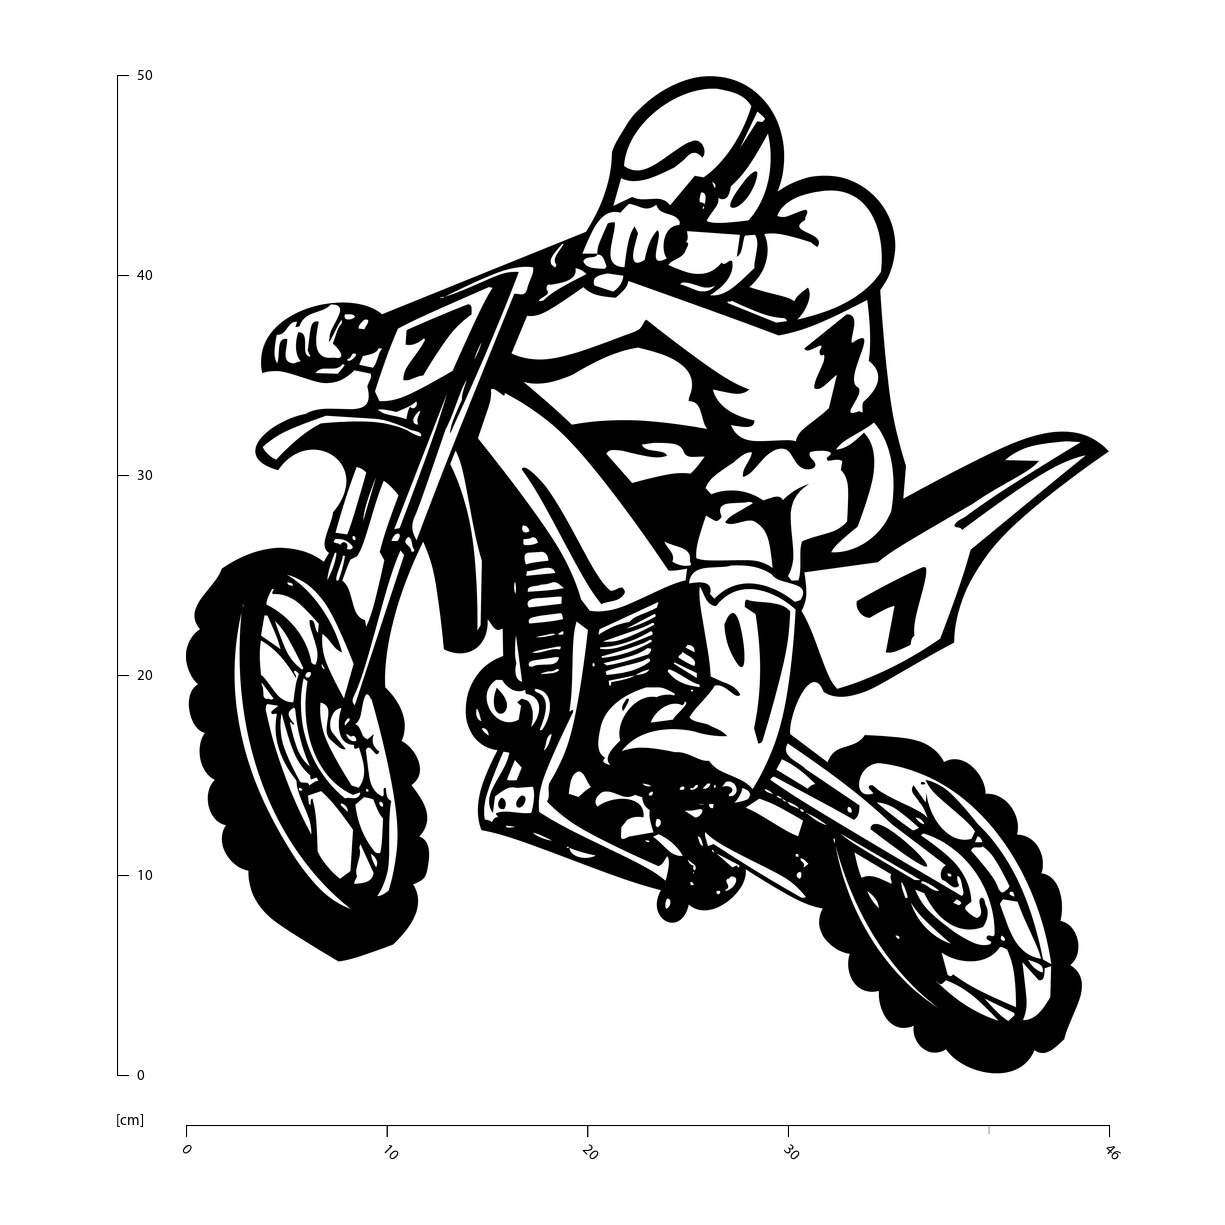 Dirt Bike Stunt Motocross Wall Sticker WS-15340